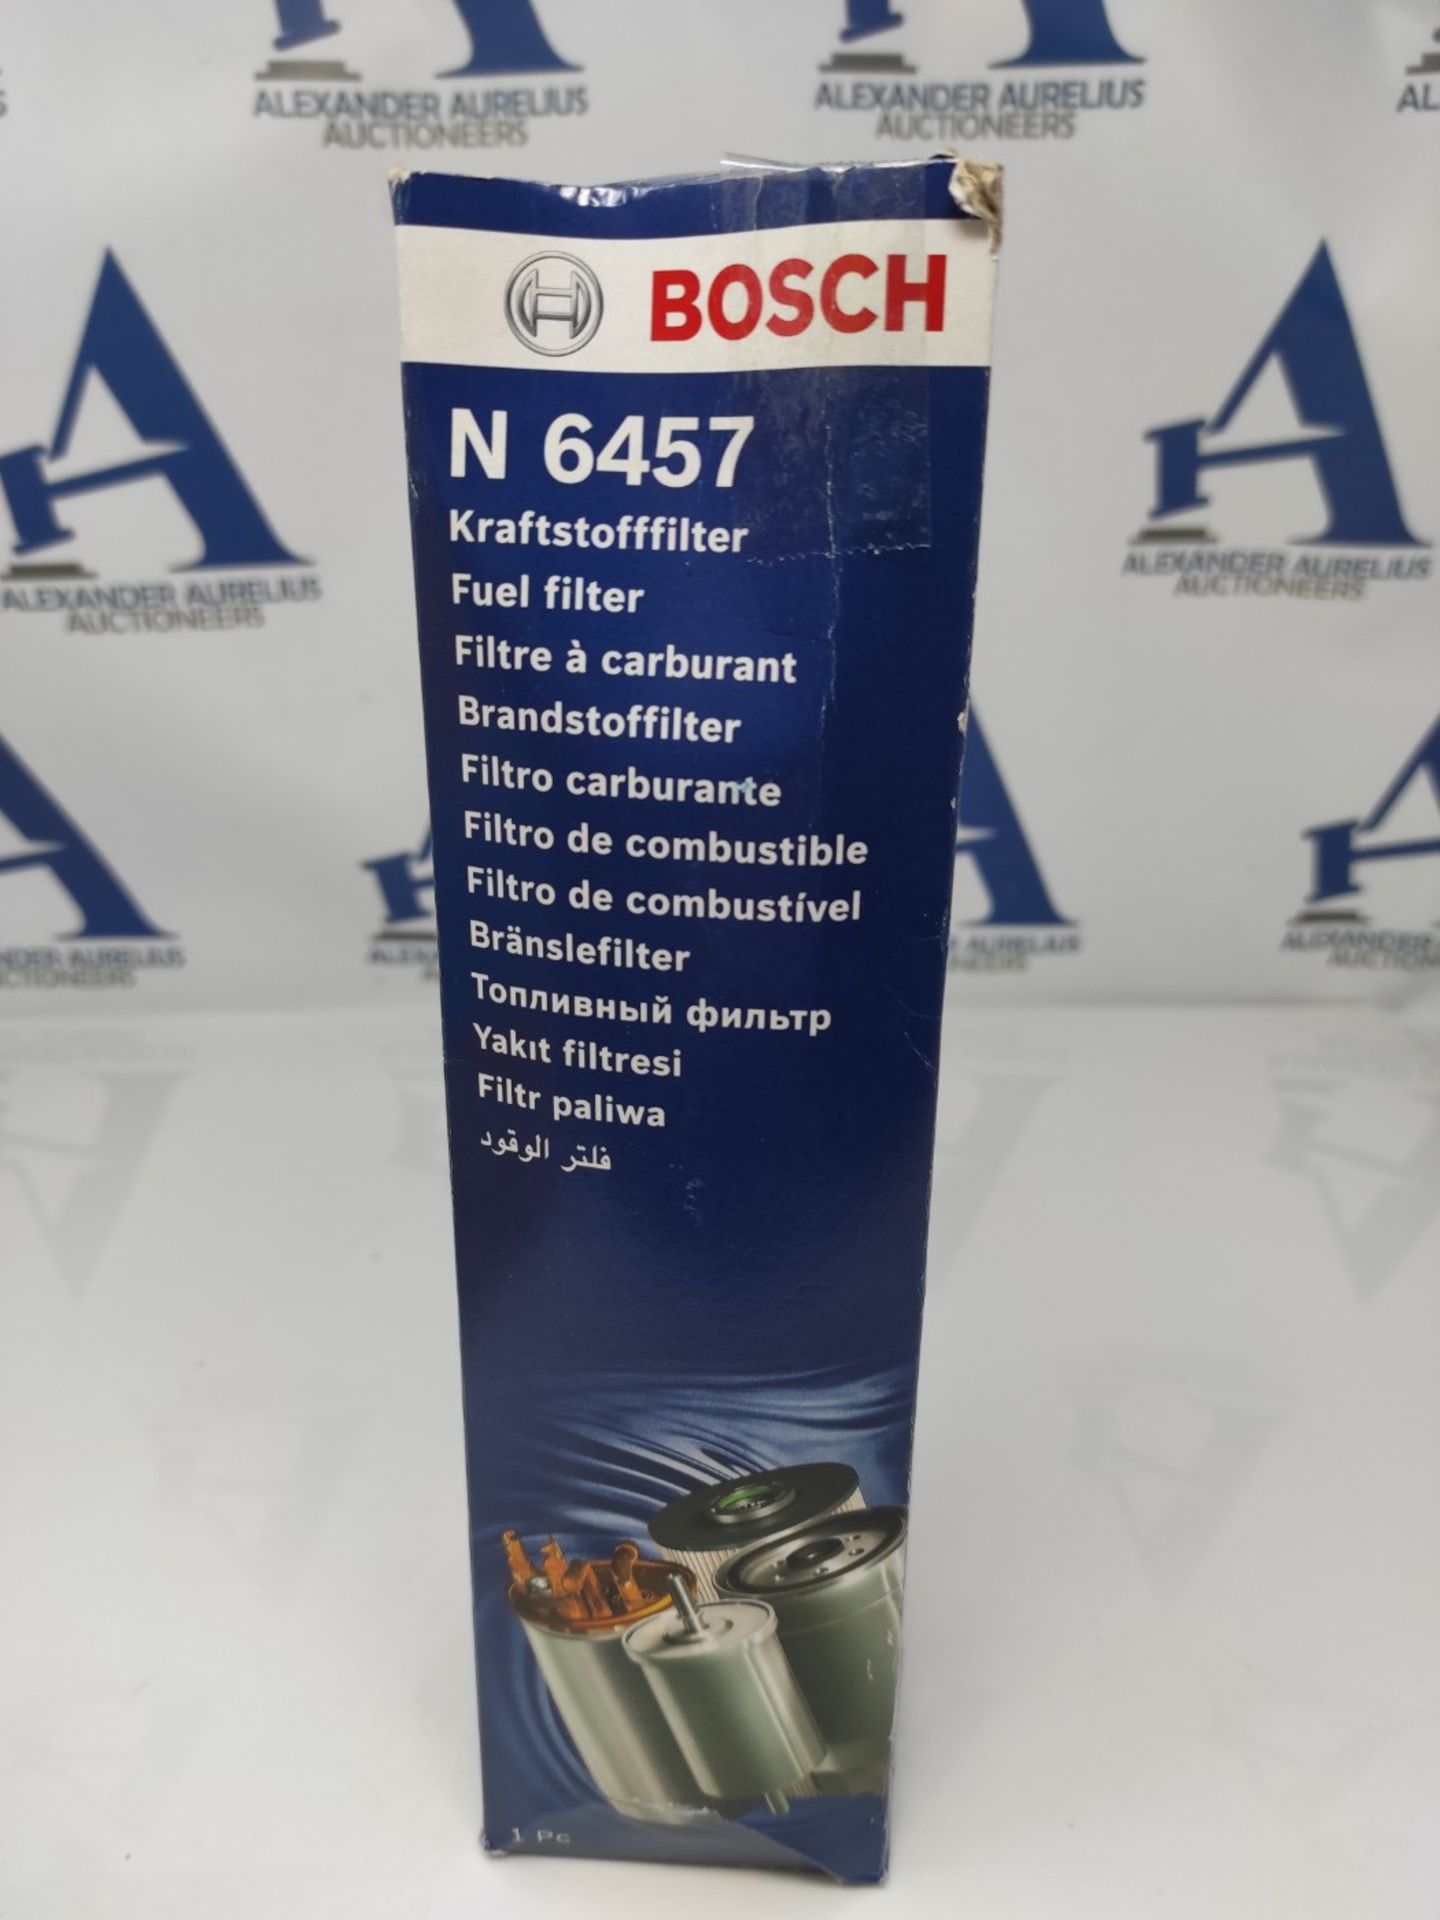 Bosch N6457 - Diesel Filter for Cars - Image 6 of 6